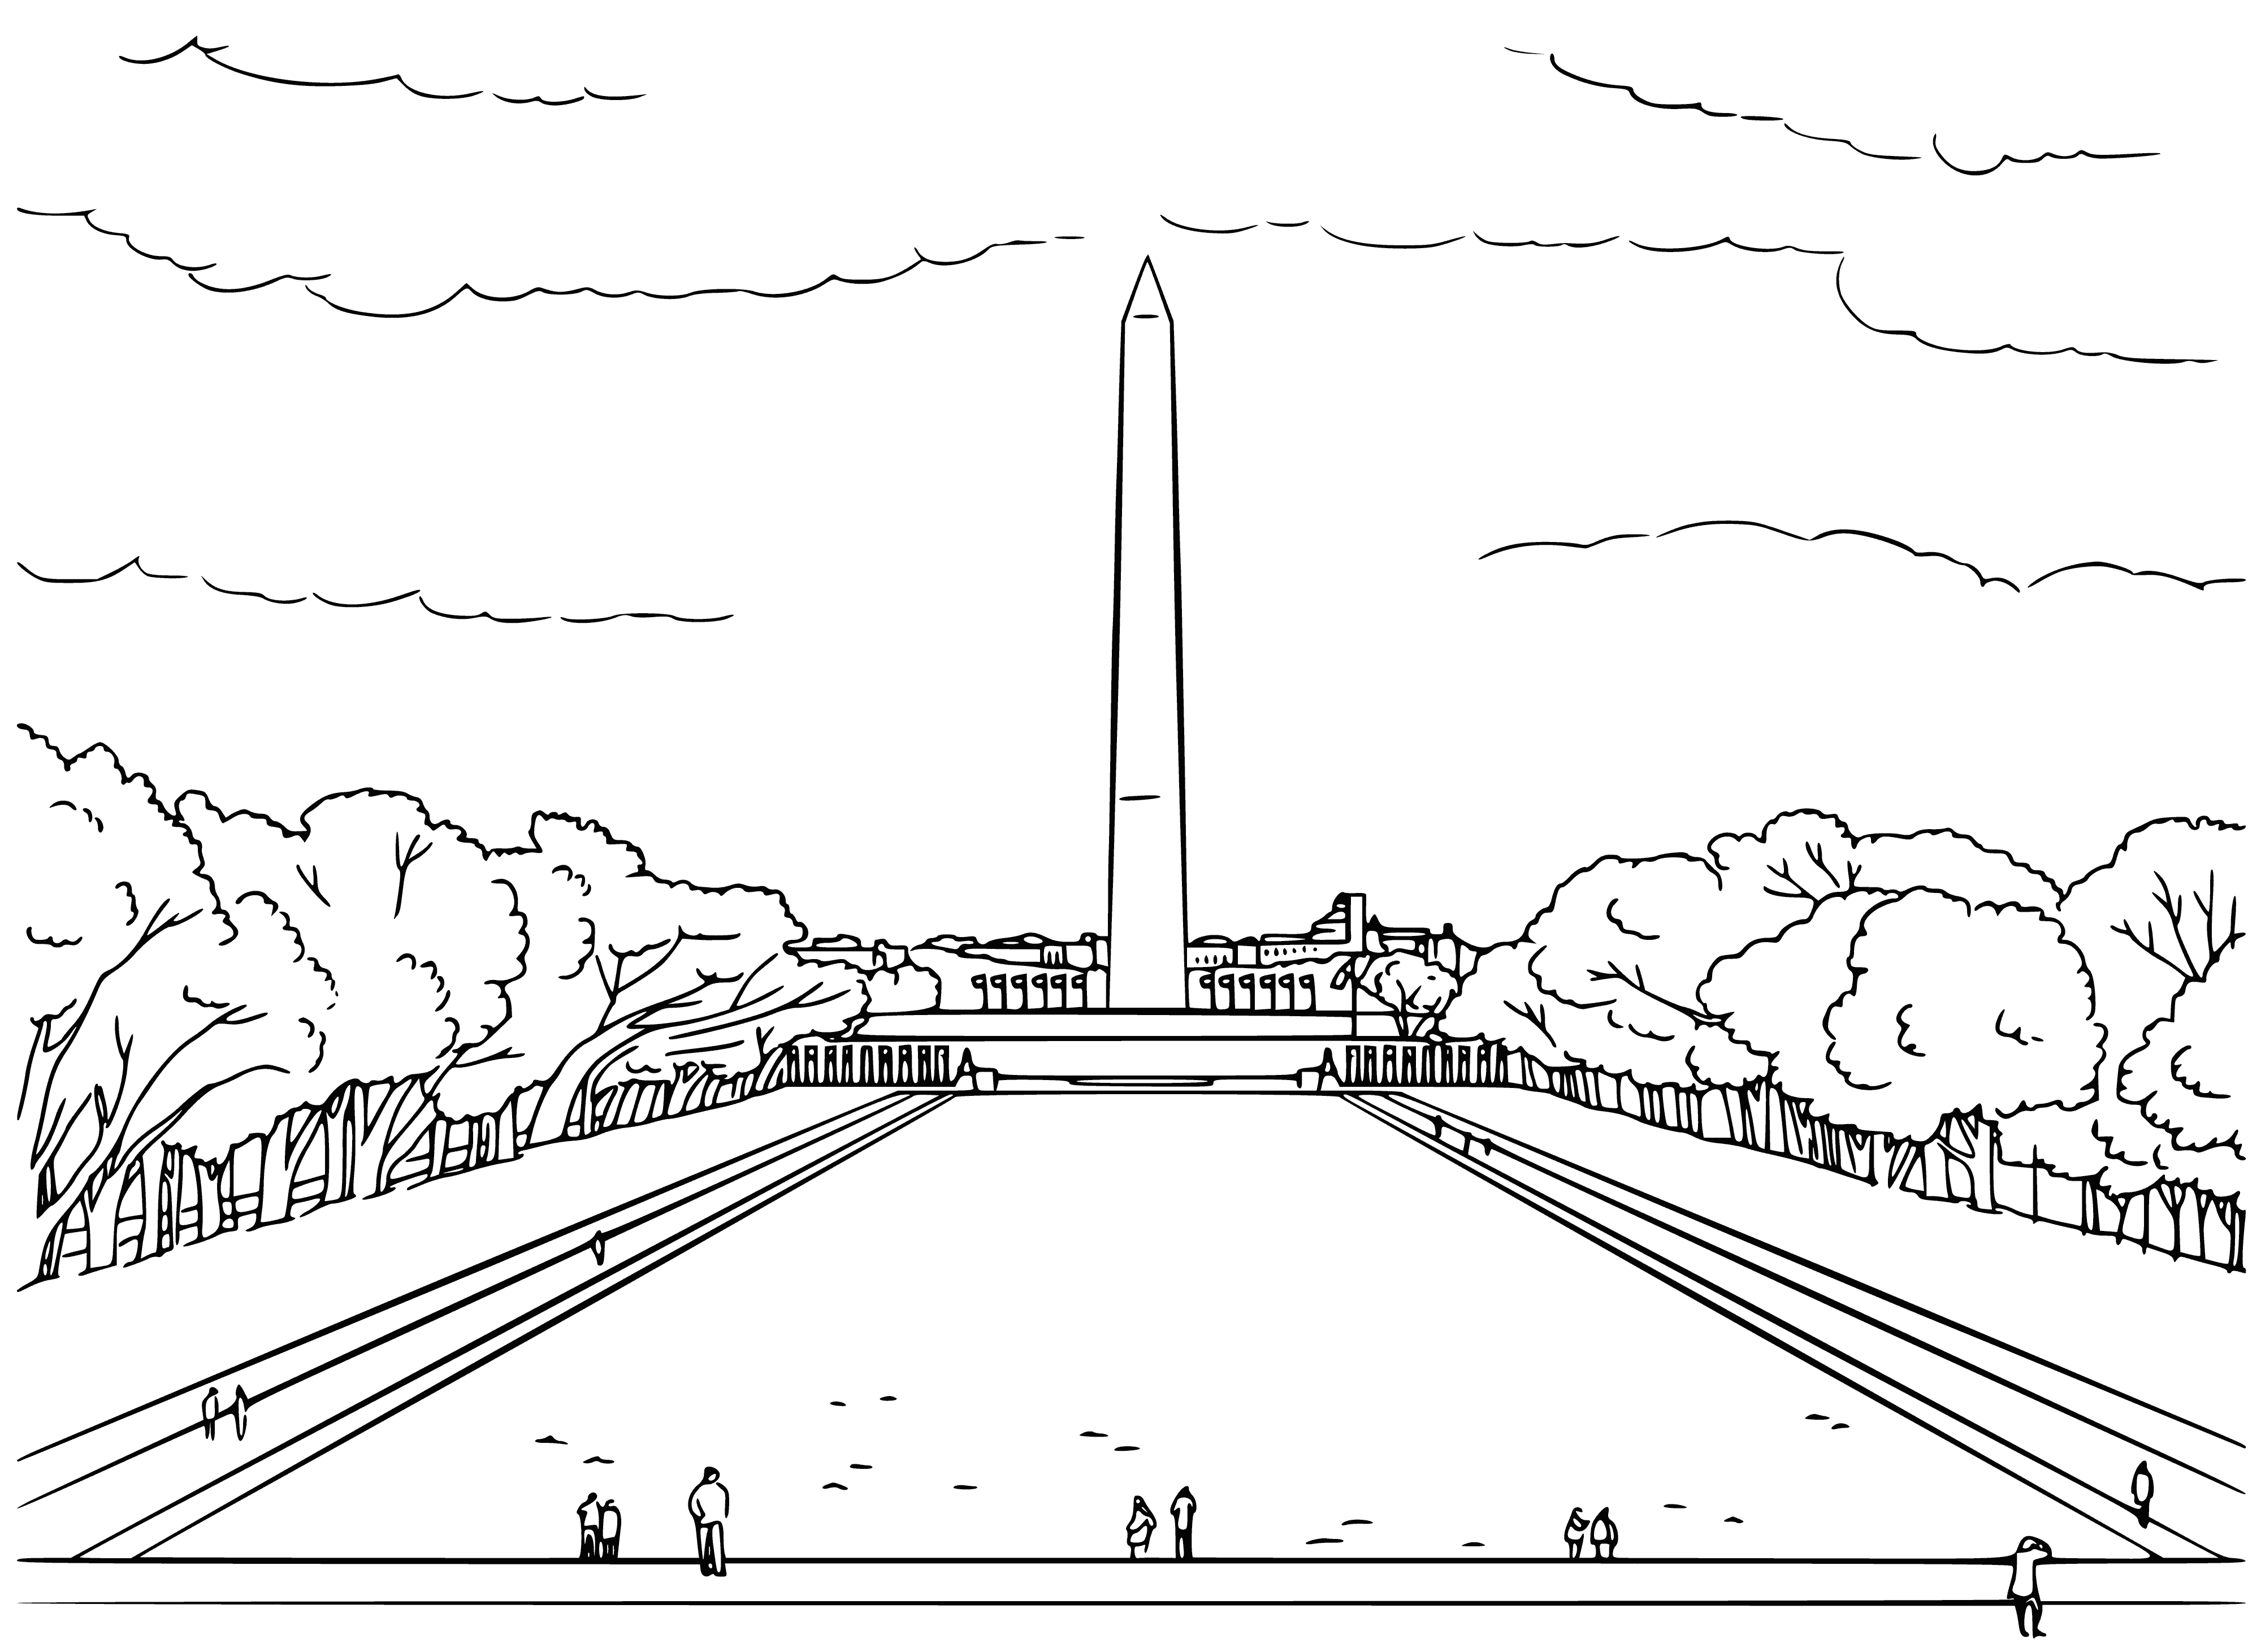 Washington Monument. VSA inkleurbladsy